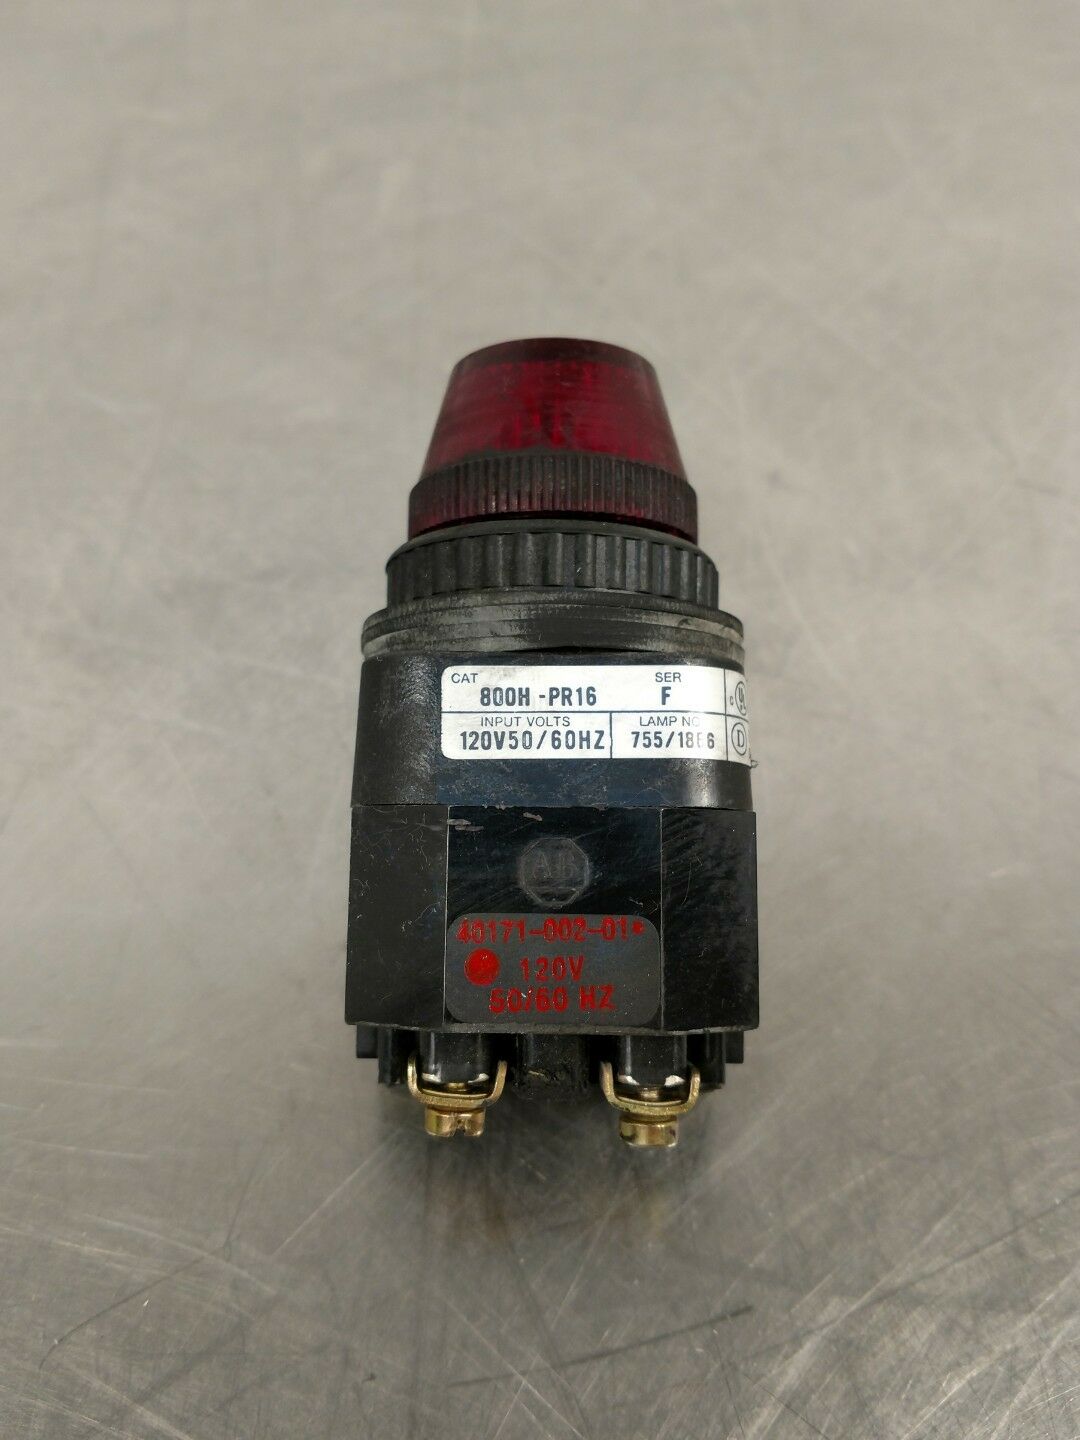 ALLEN BRADLEY 800H-PR16 Ser. F Indicator Module Red 4A